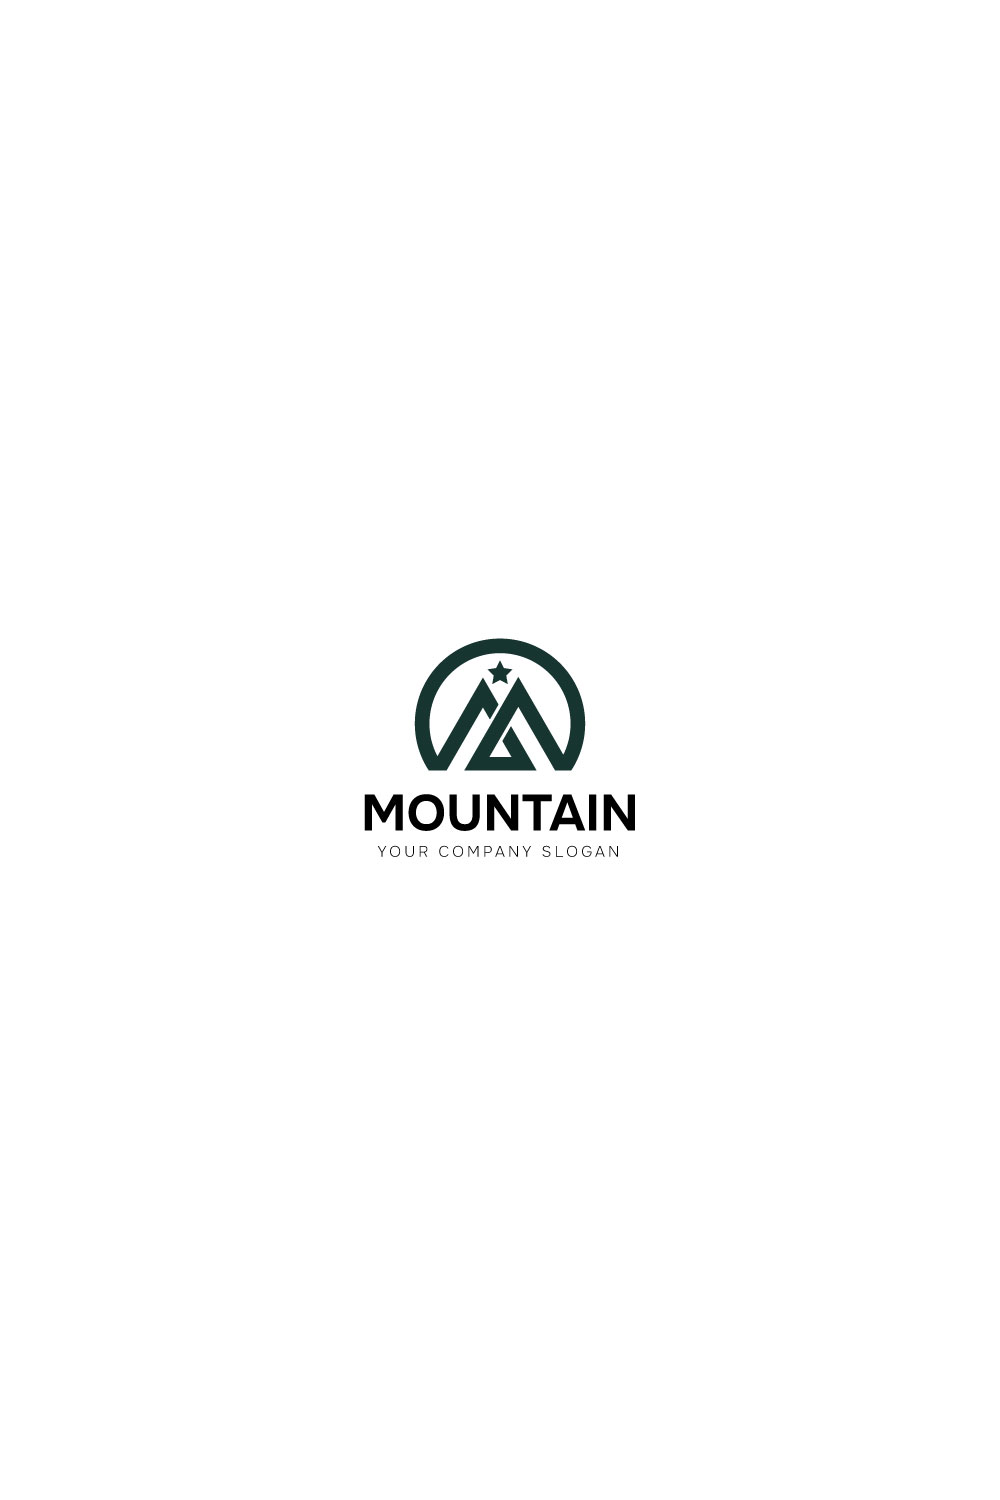 Mountain logo design pinterest preview image.